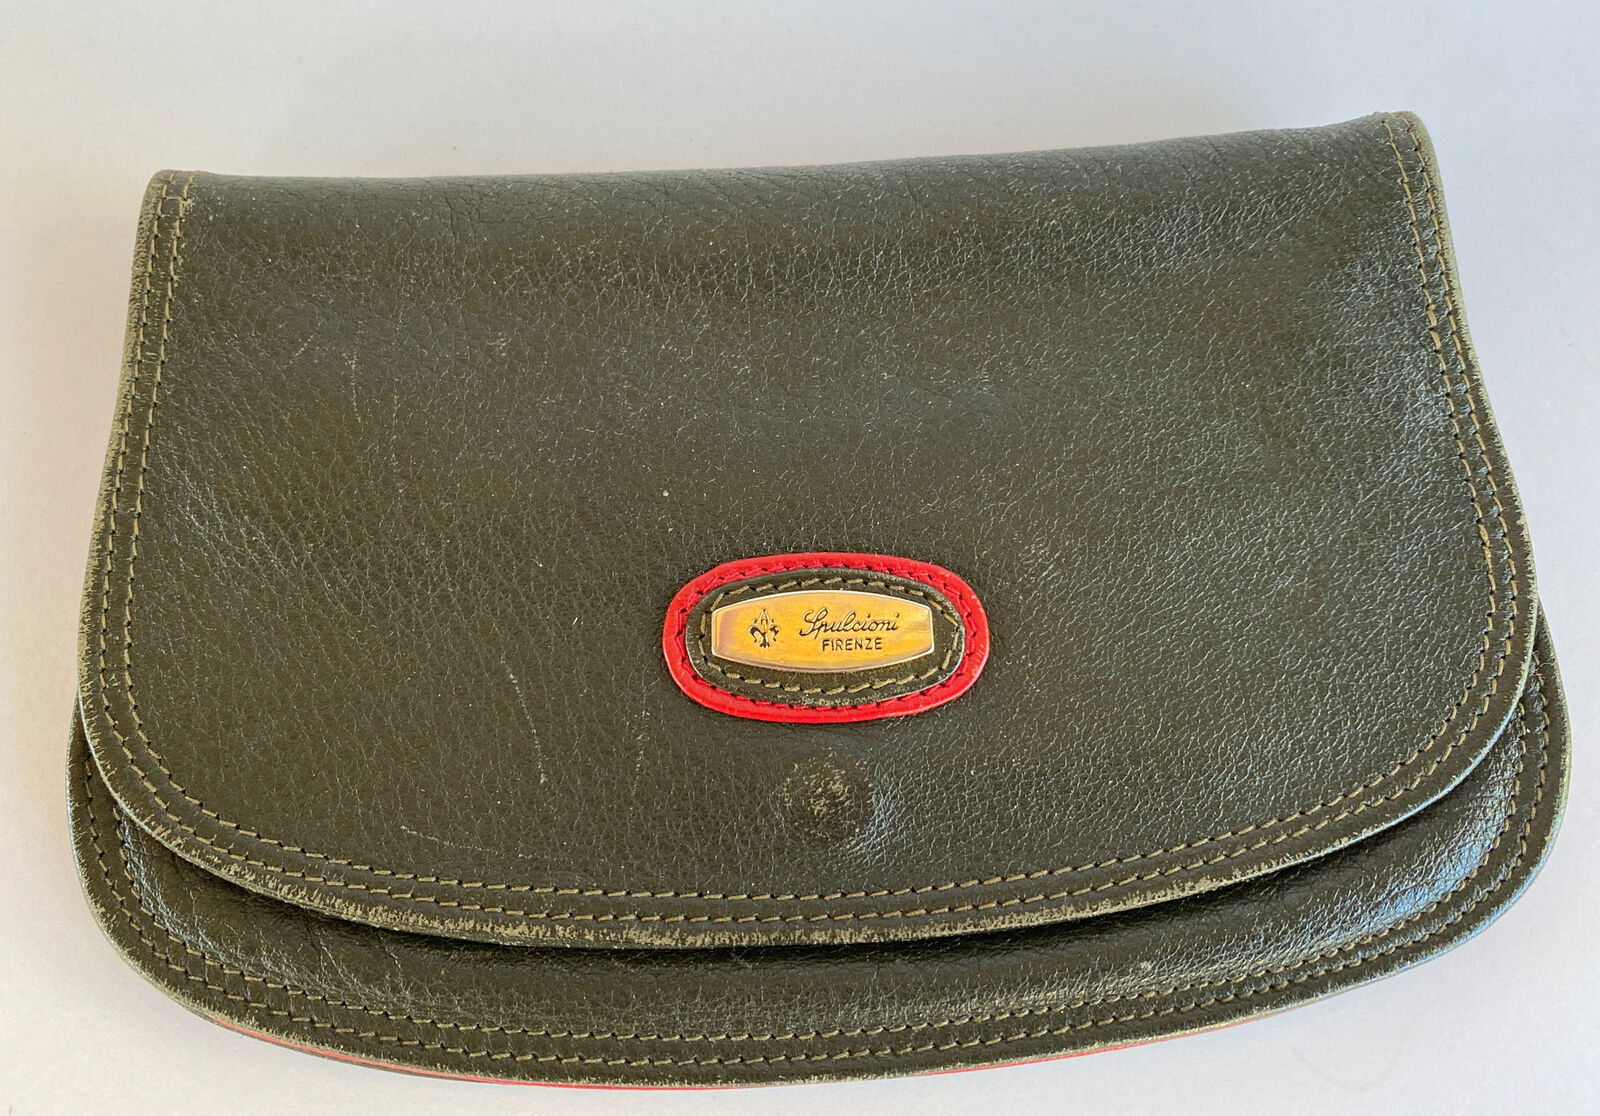 Spulcioni Firenze Green Leather 5 Pocket Wallet Pouch Organizer 7”x 4.5”